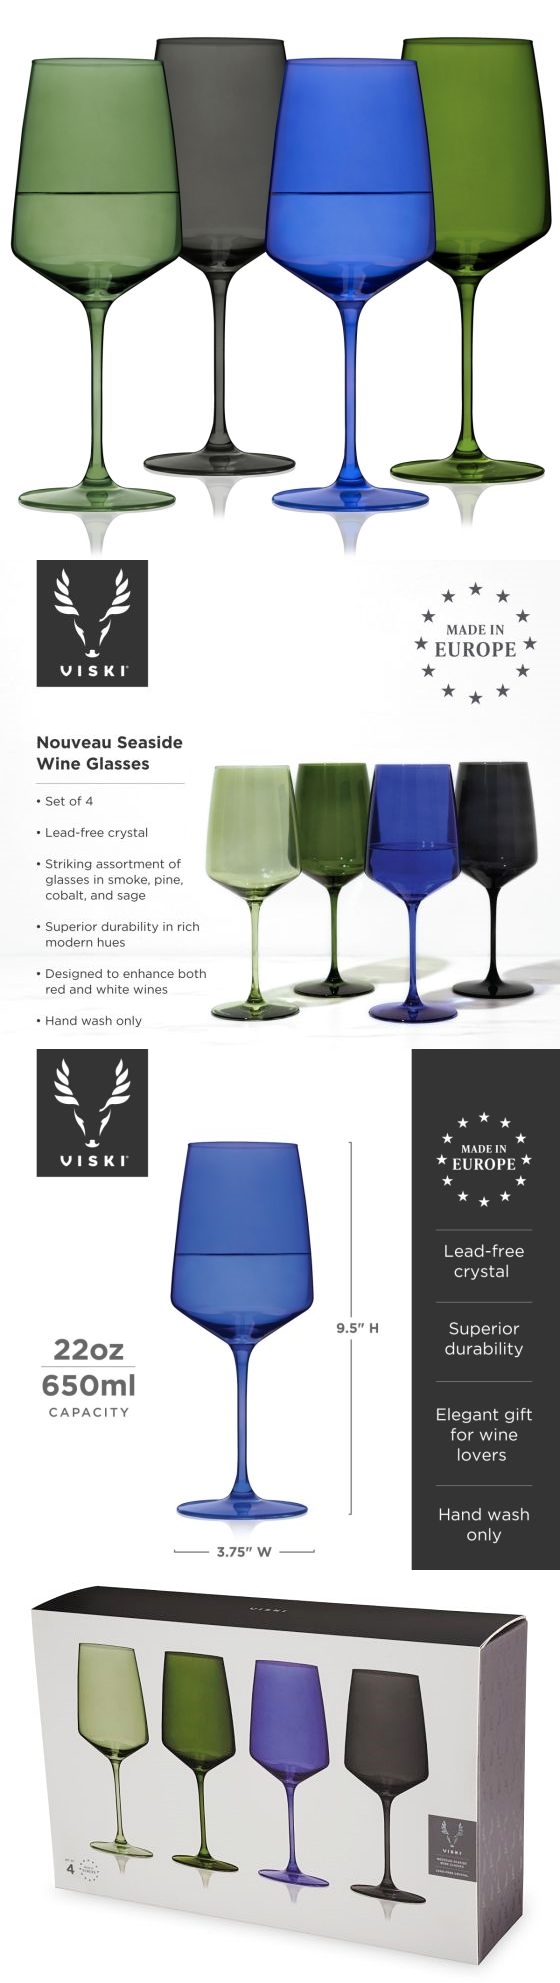 Reserve Nouveau 22oz "Seaside" Wine Glasses by VISKI (Set of 4)